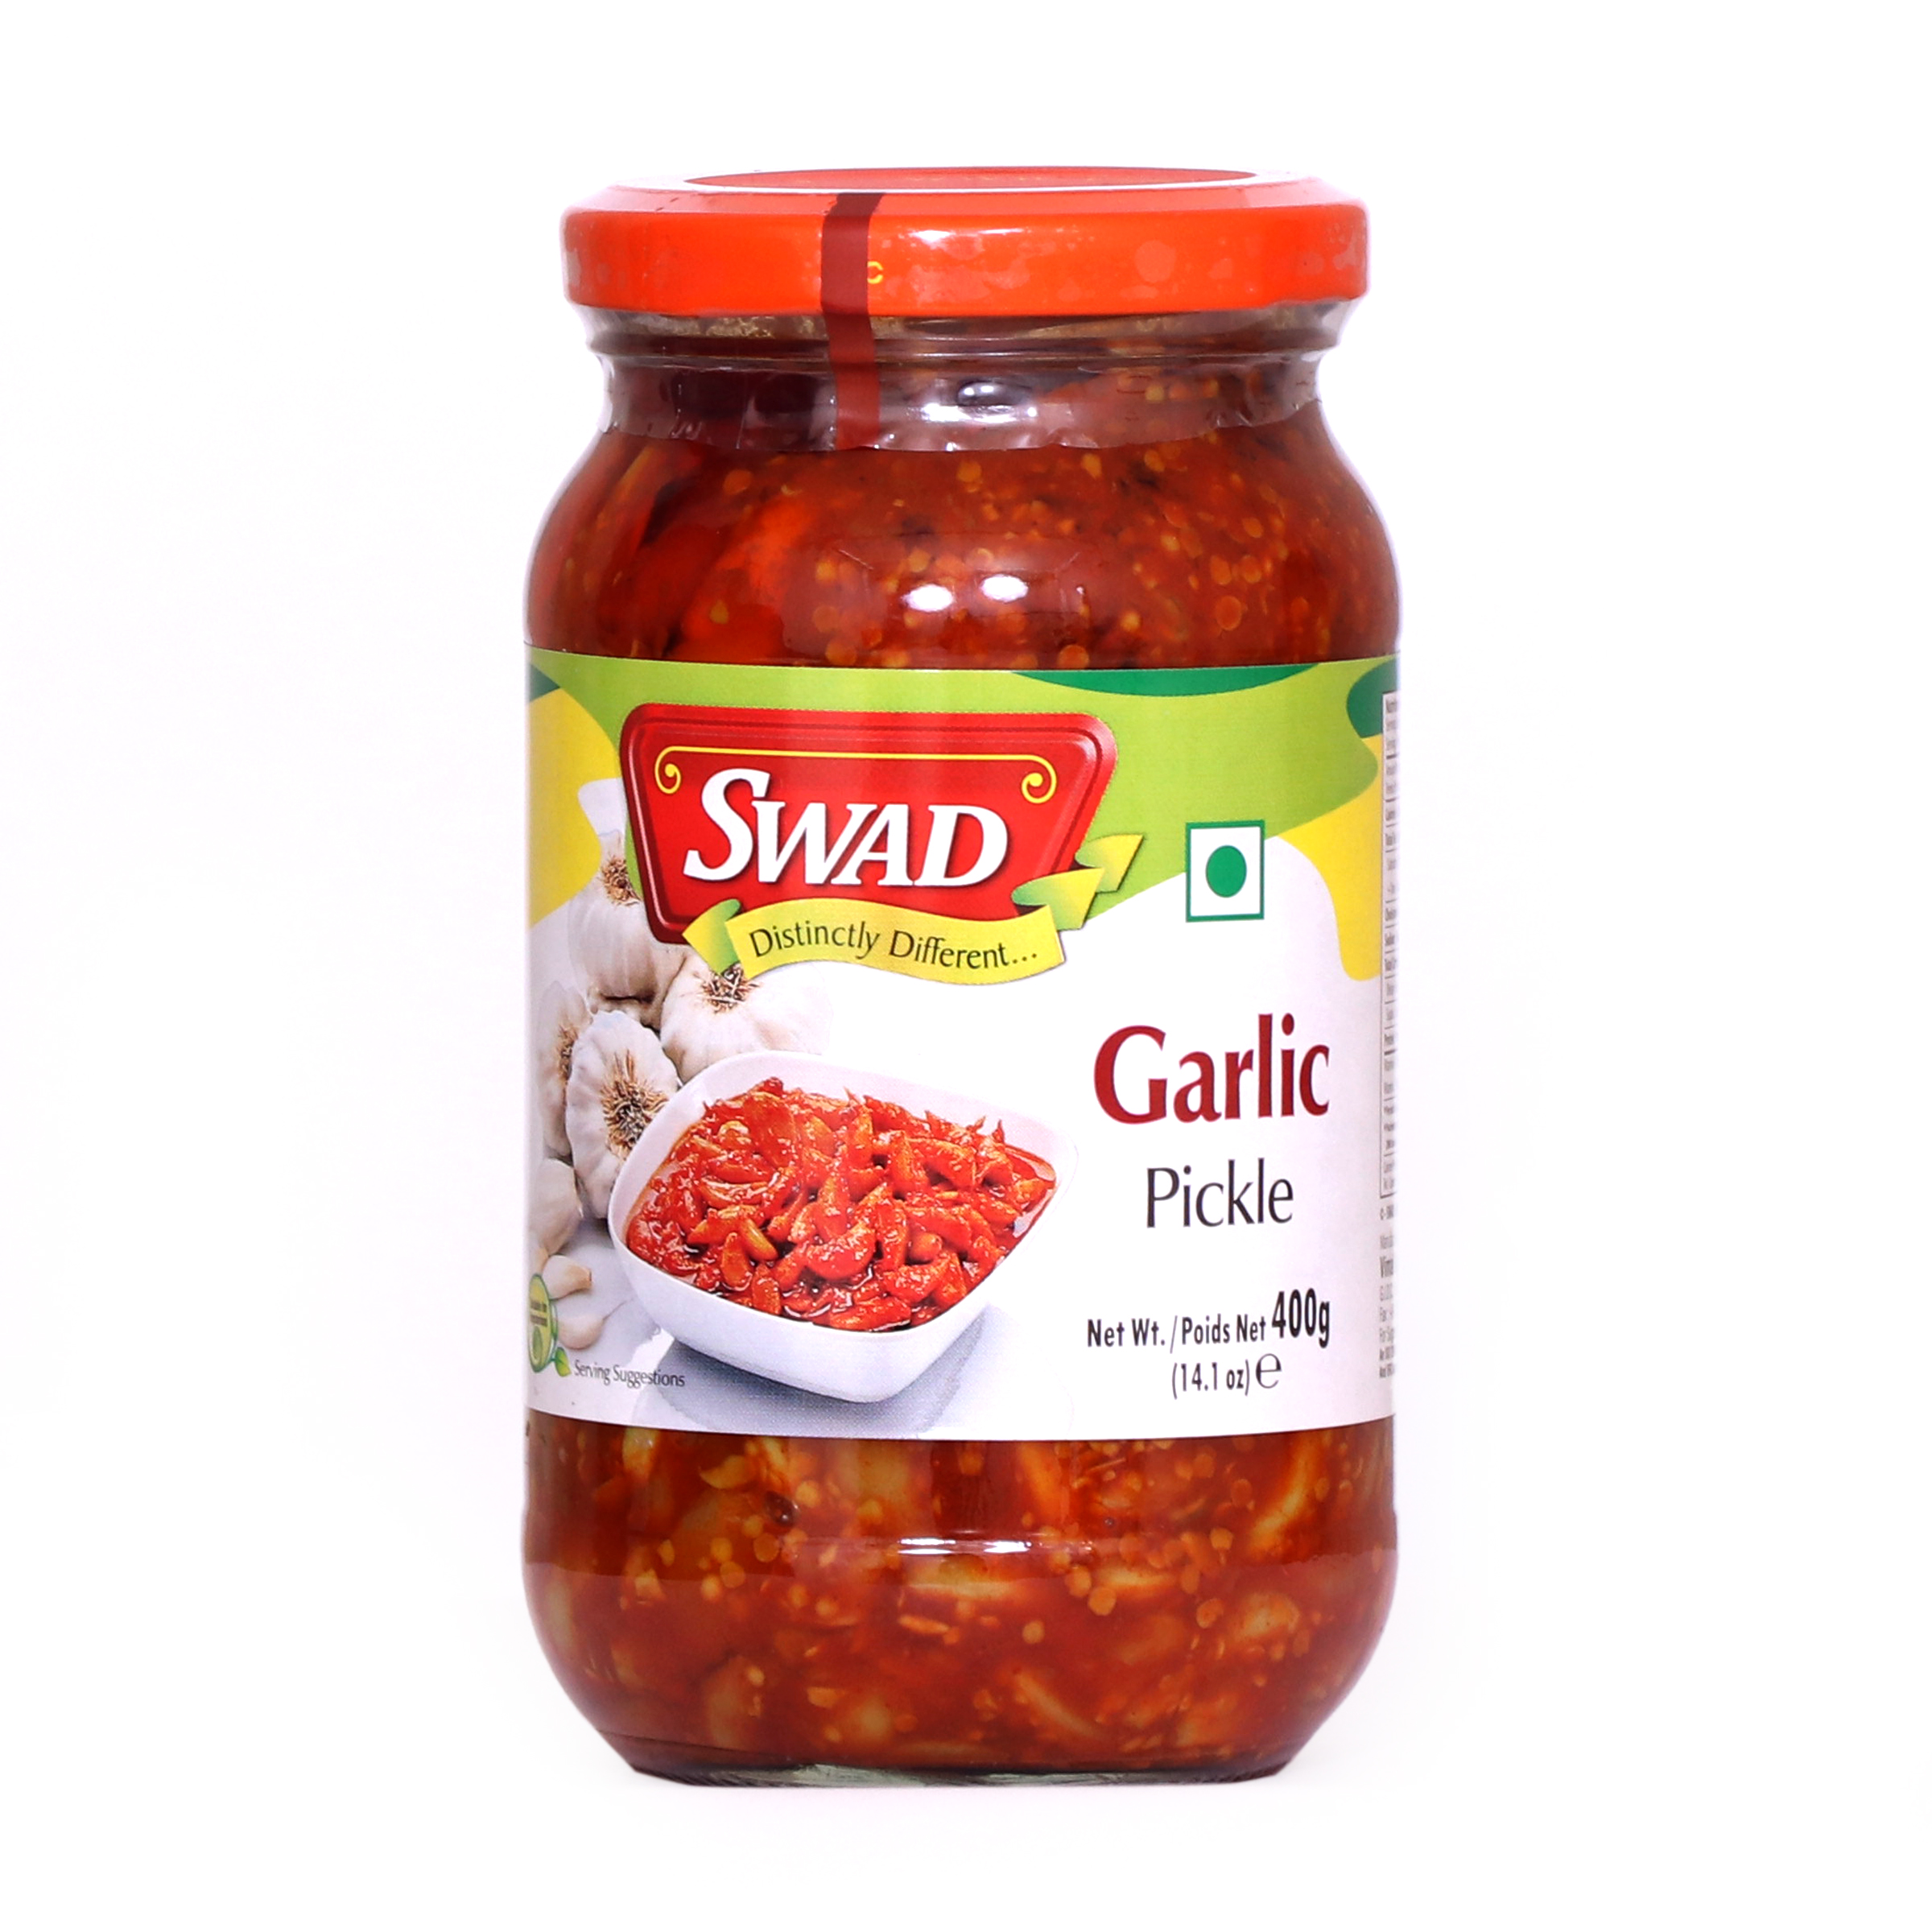 Buy Online Swad Garlic Pickle400g 46 Discount Swad Shop